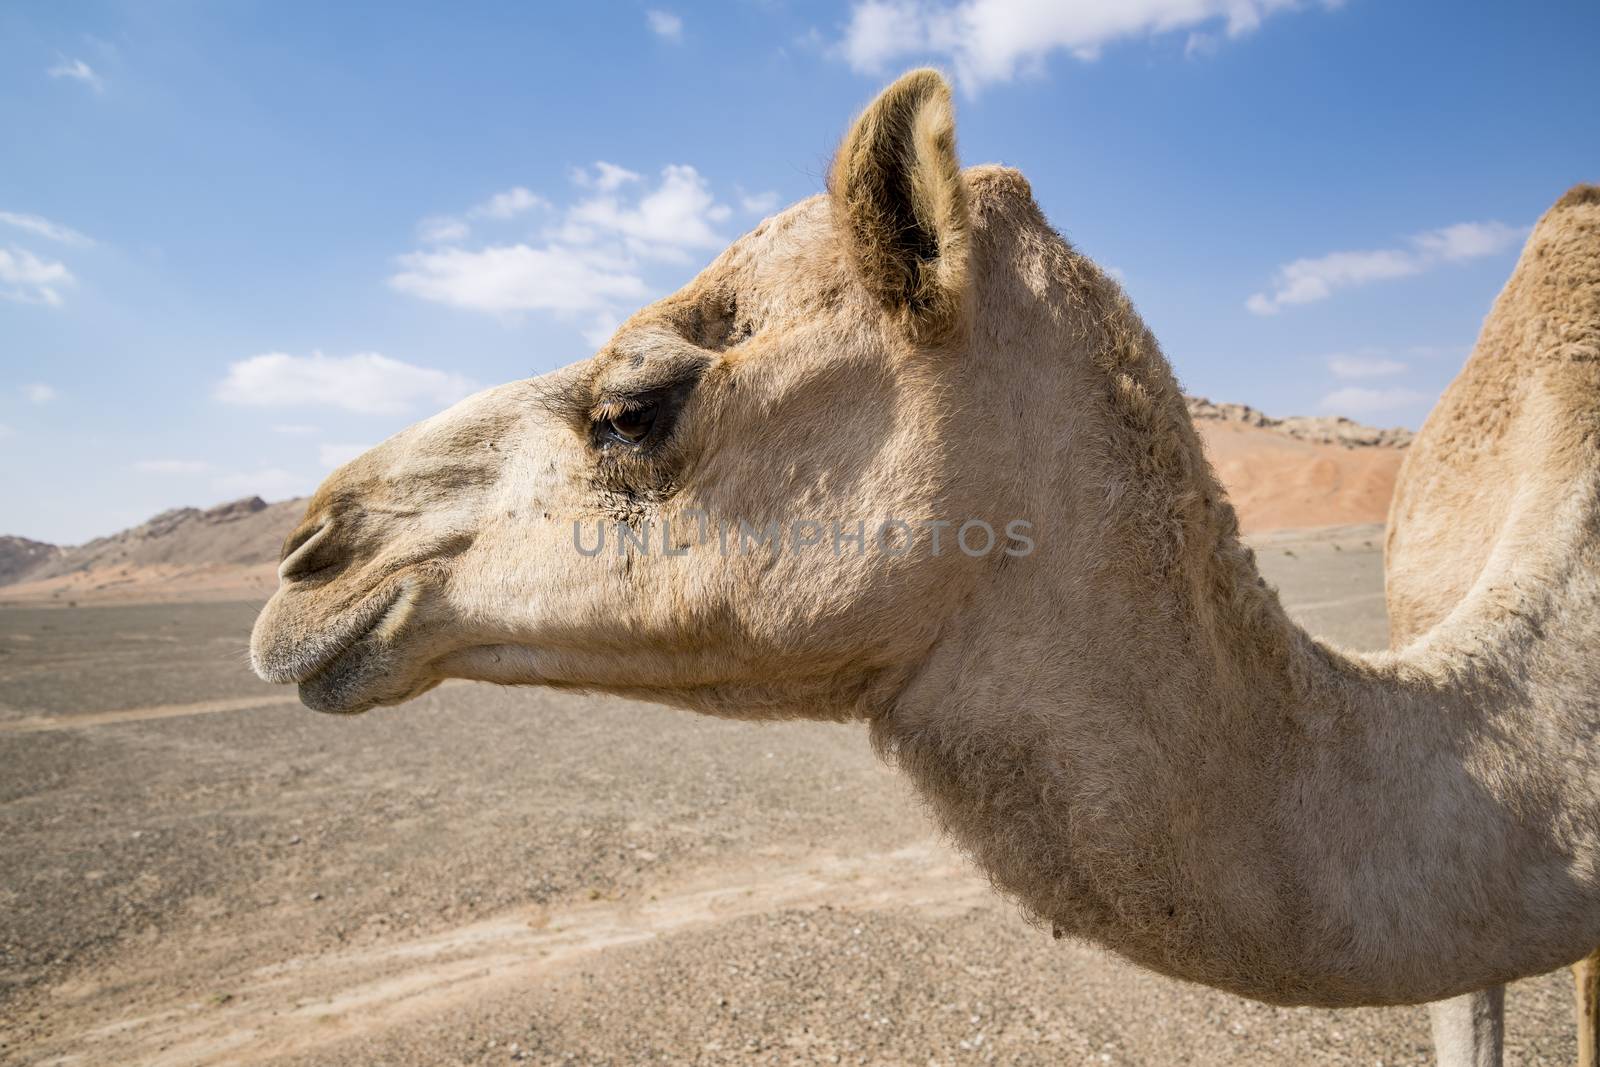 Camel head in Sharjah Emirates, UAE by GABIS